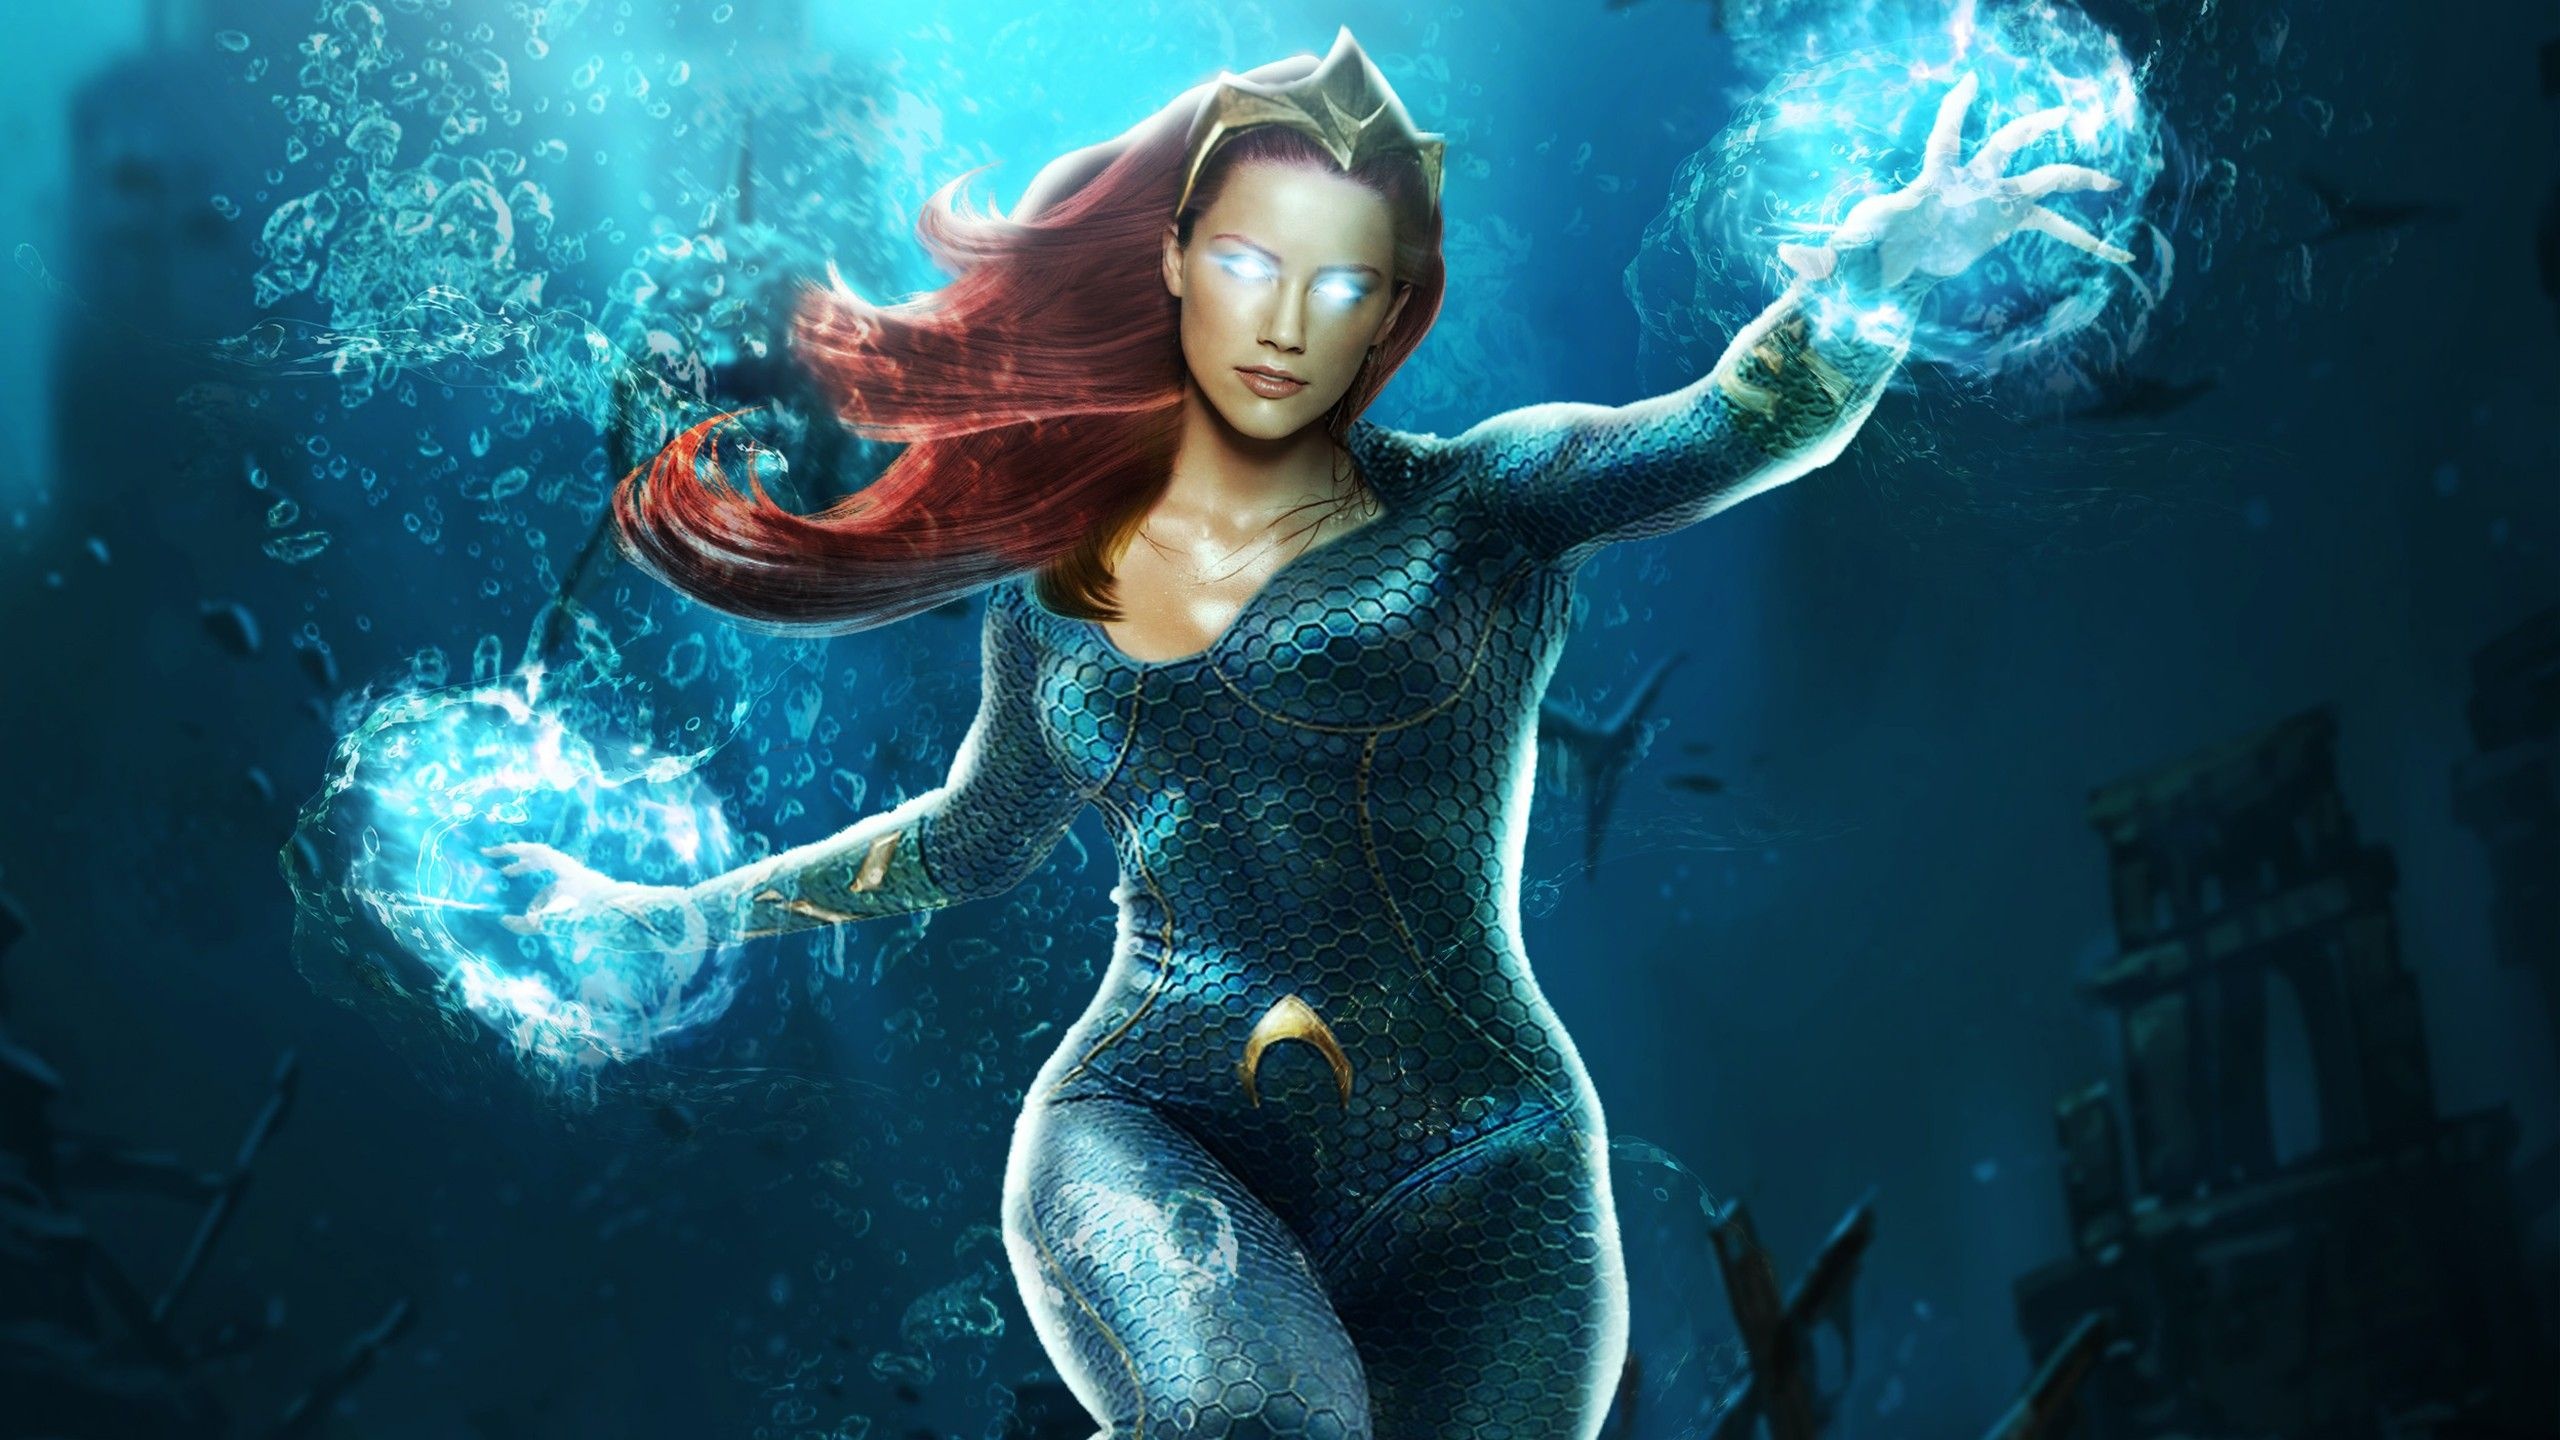 Princess Mera, Aquaman's love, Majestic wallpapers, Underwater royalty, 2560x1440 HD Desktop